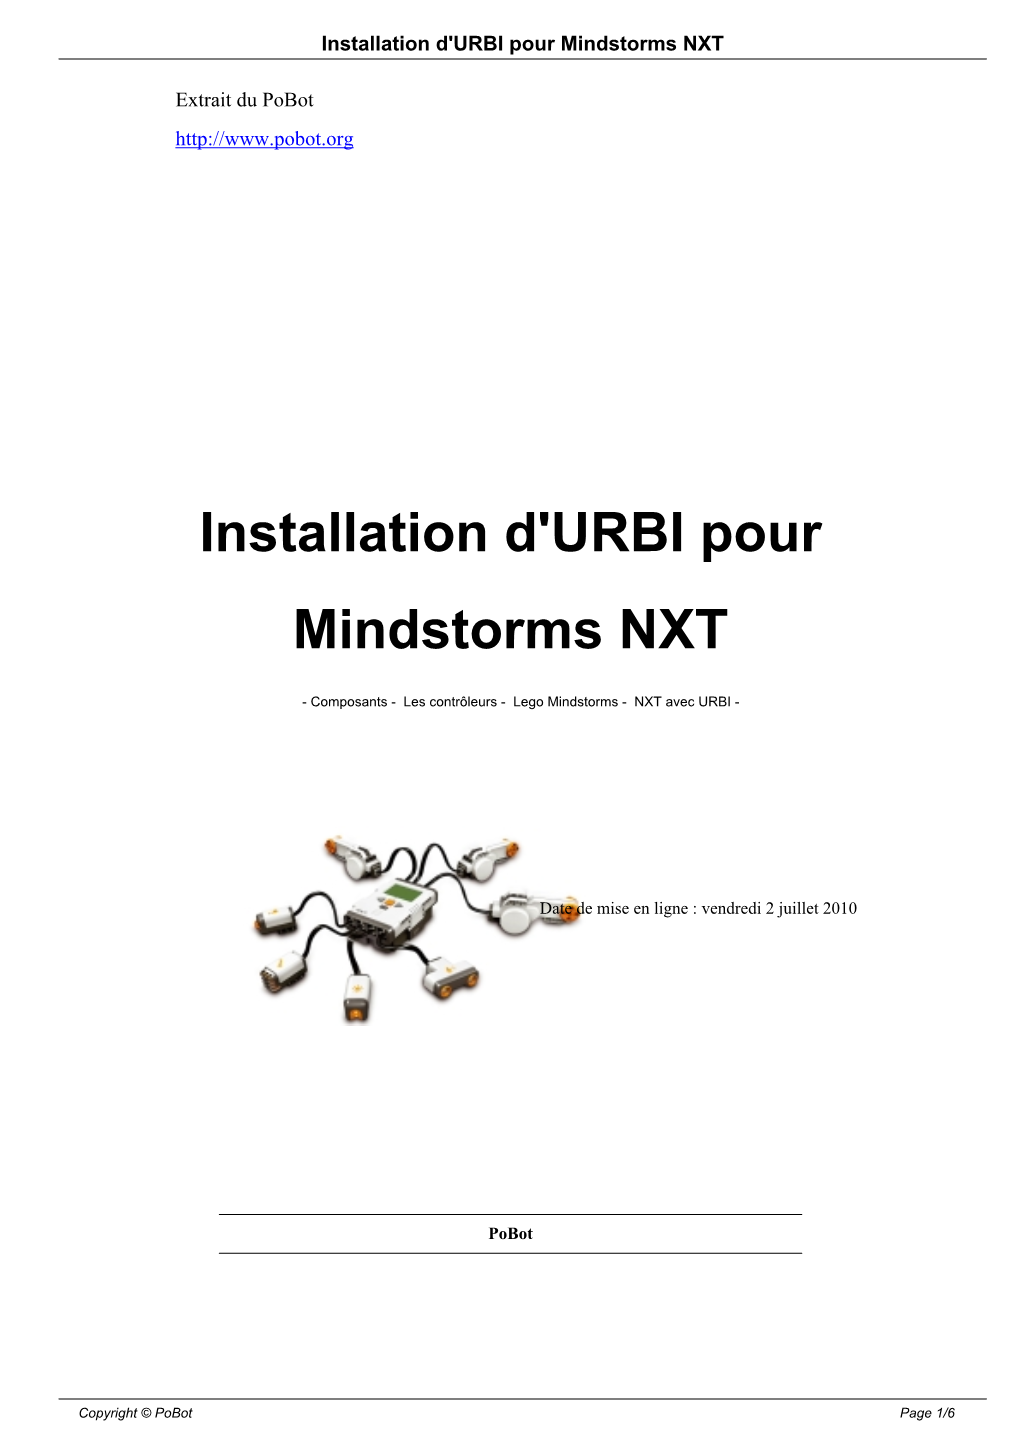 Installation D'urbi Pour Mindstorms NXT